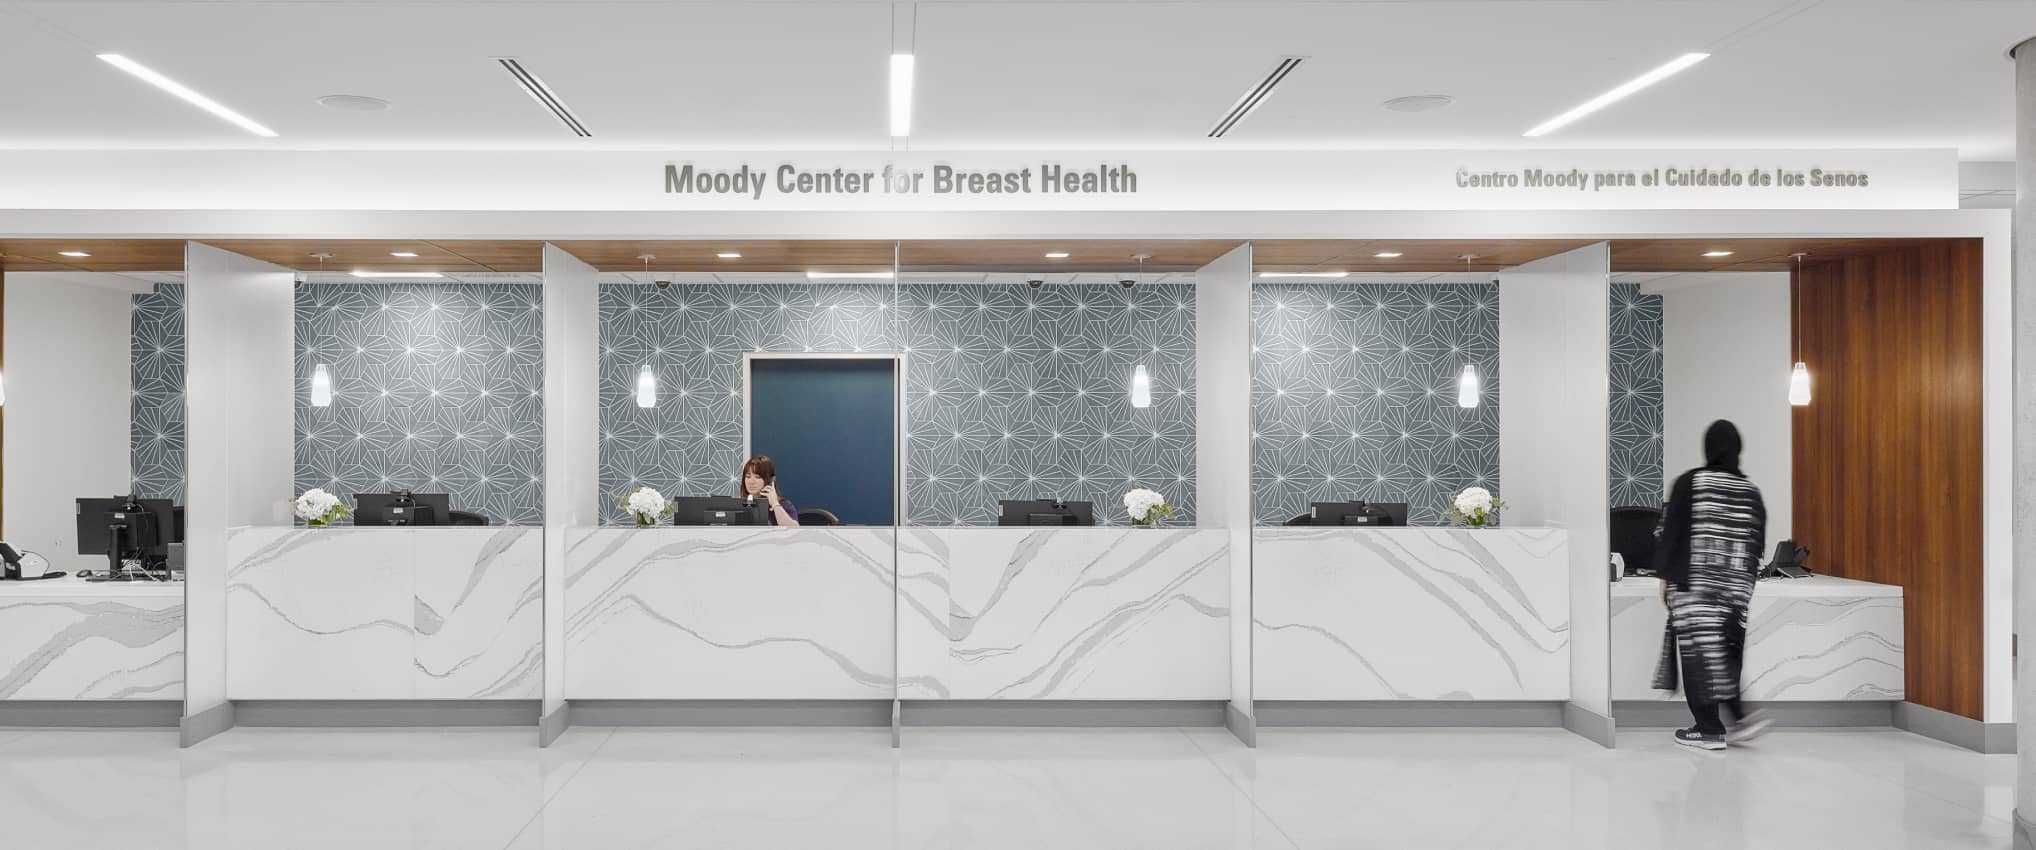 Parkland Hospital Moody Center for Breast Health